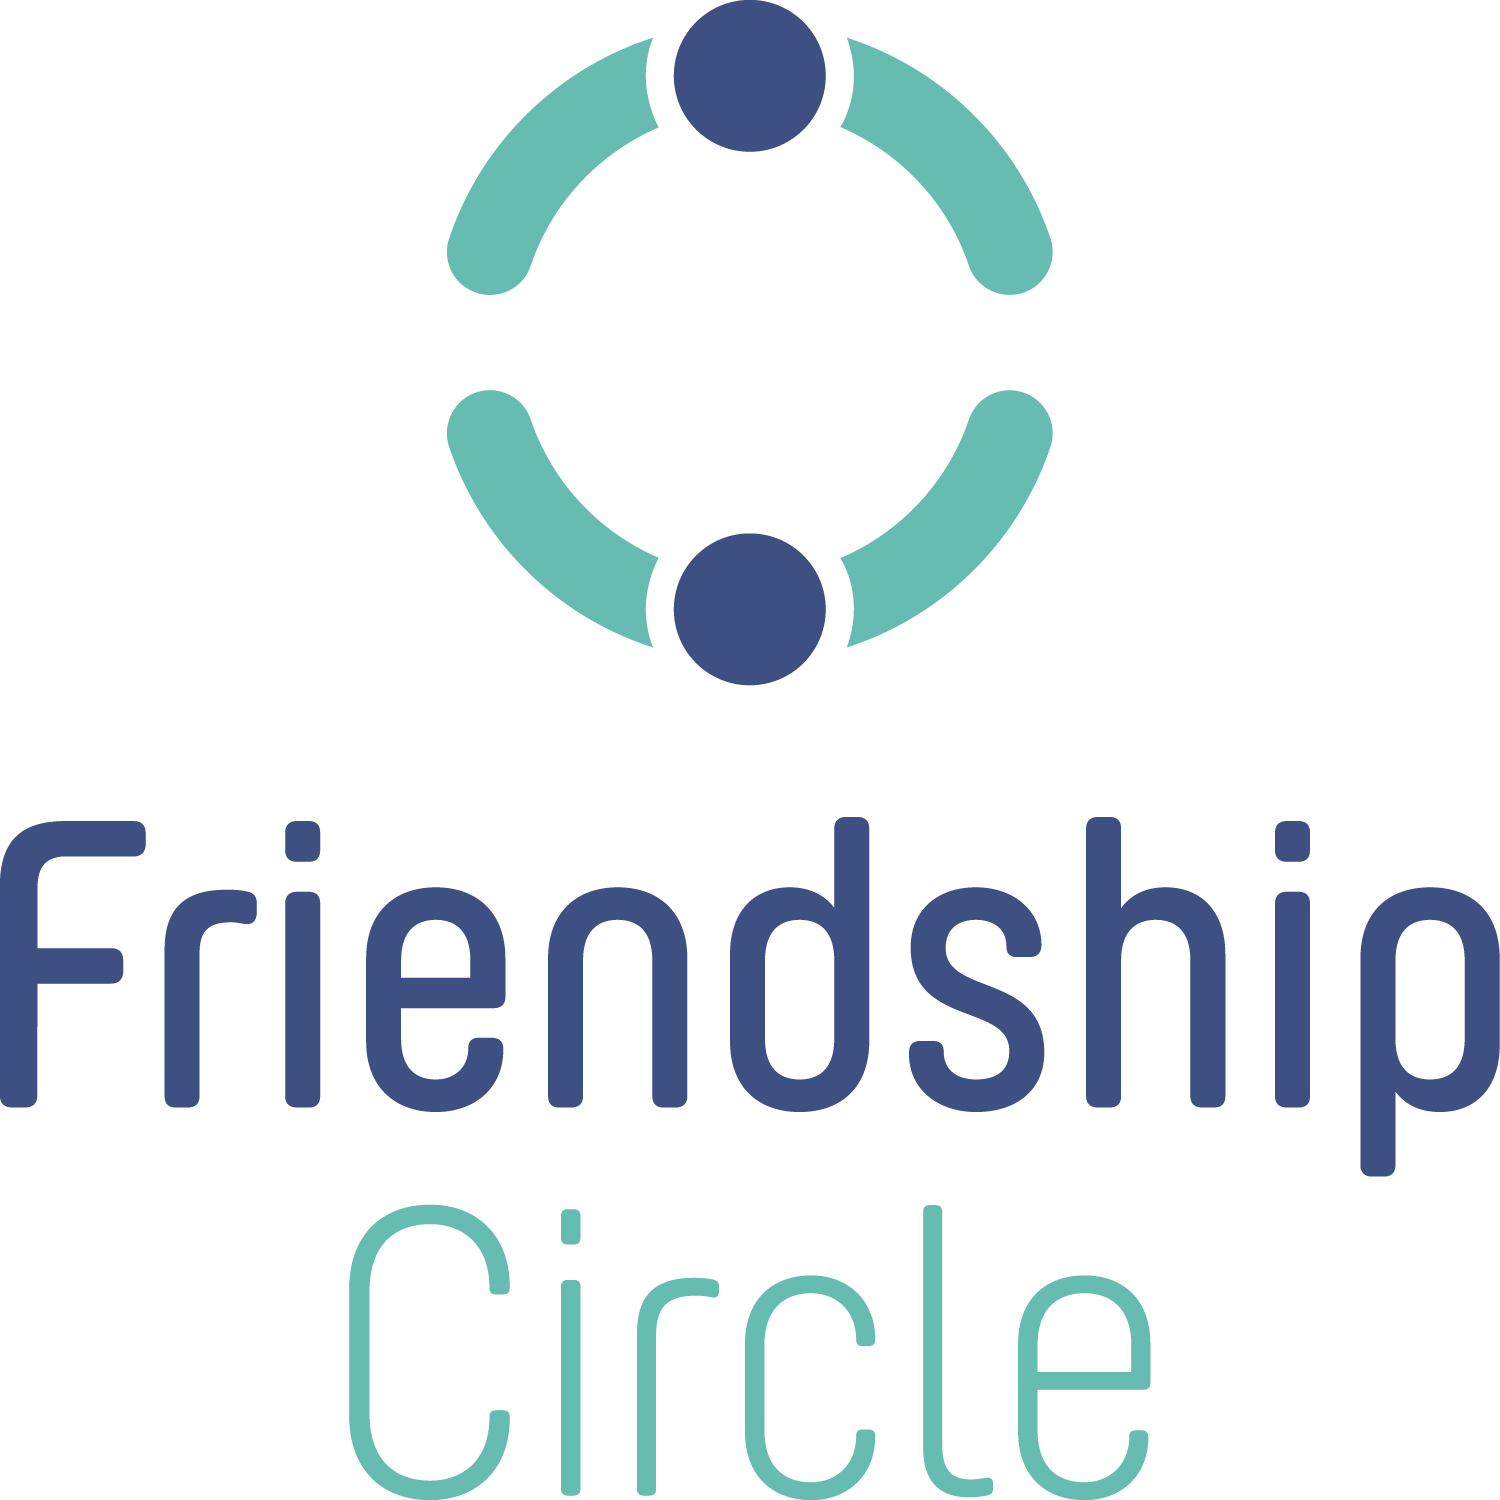 Friendship Circle Logo - Friendship Circle NJ